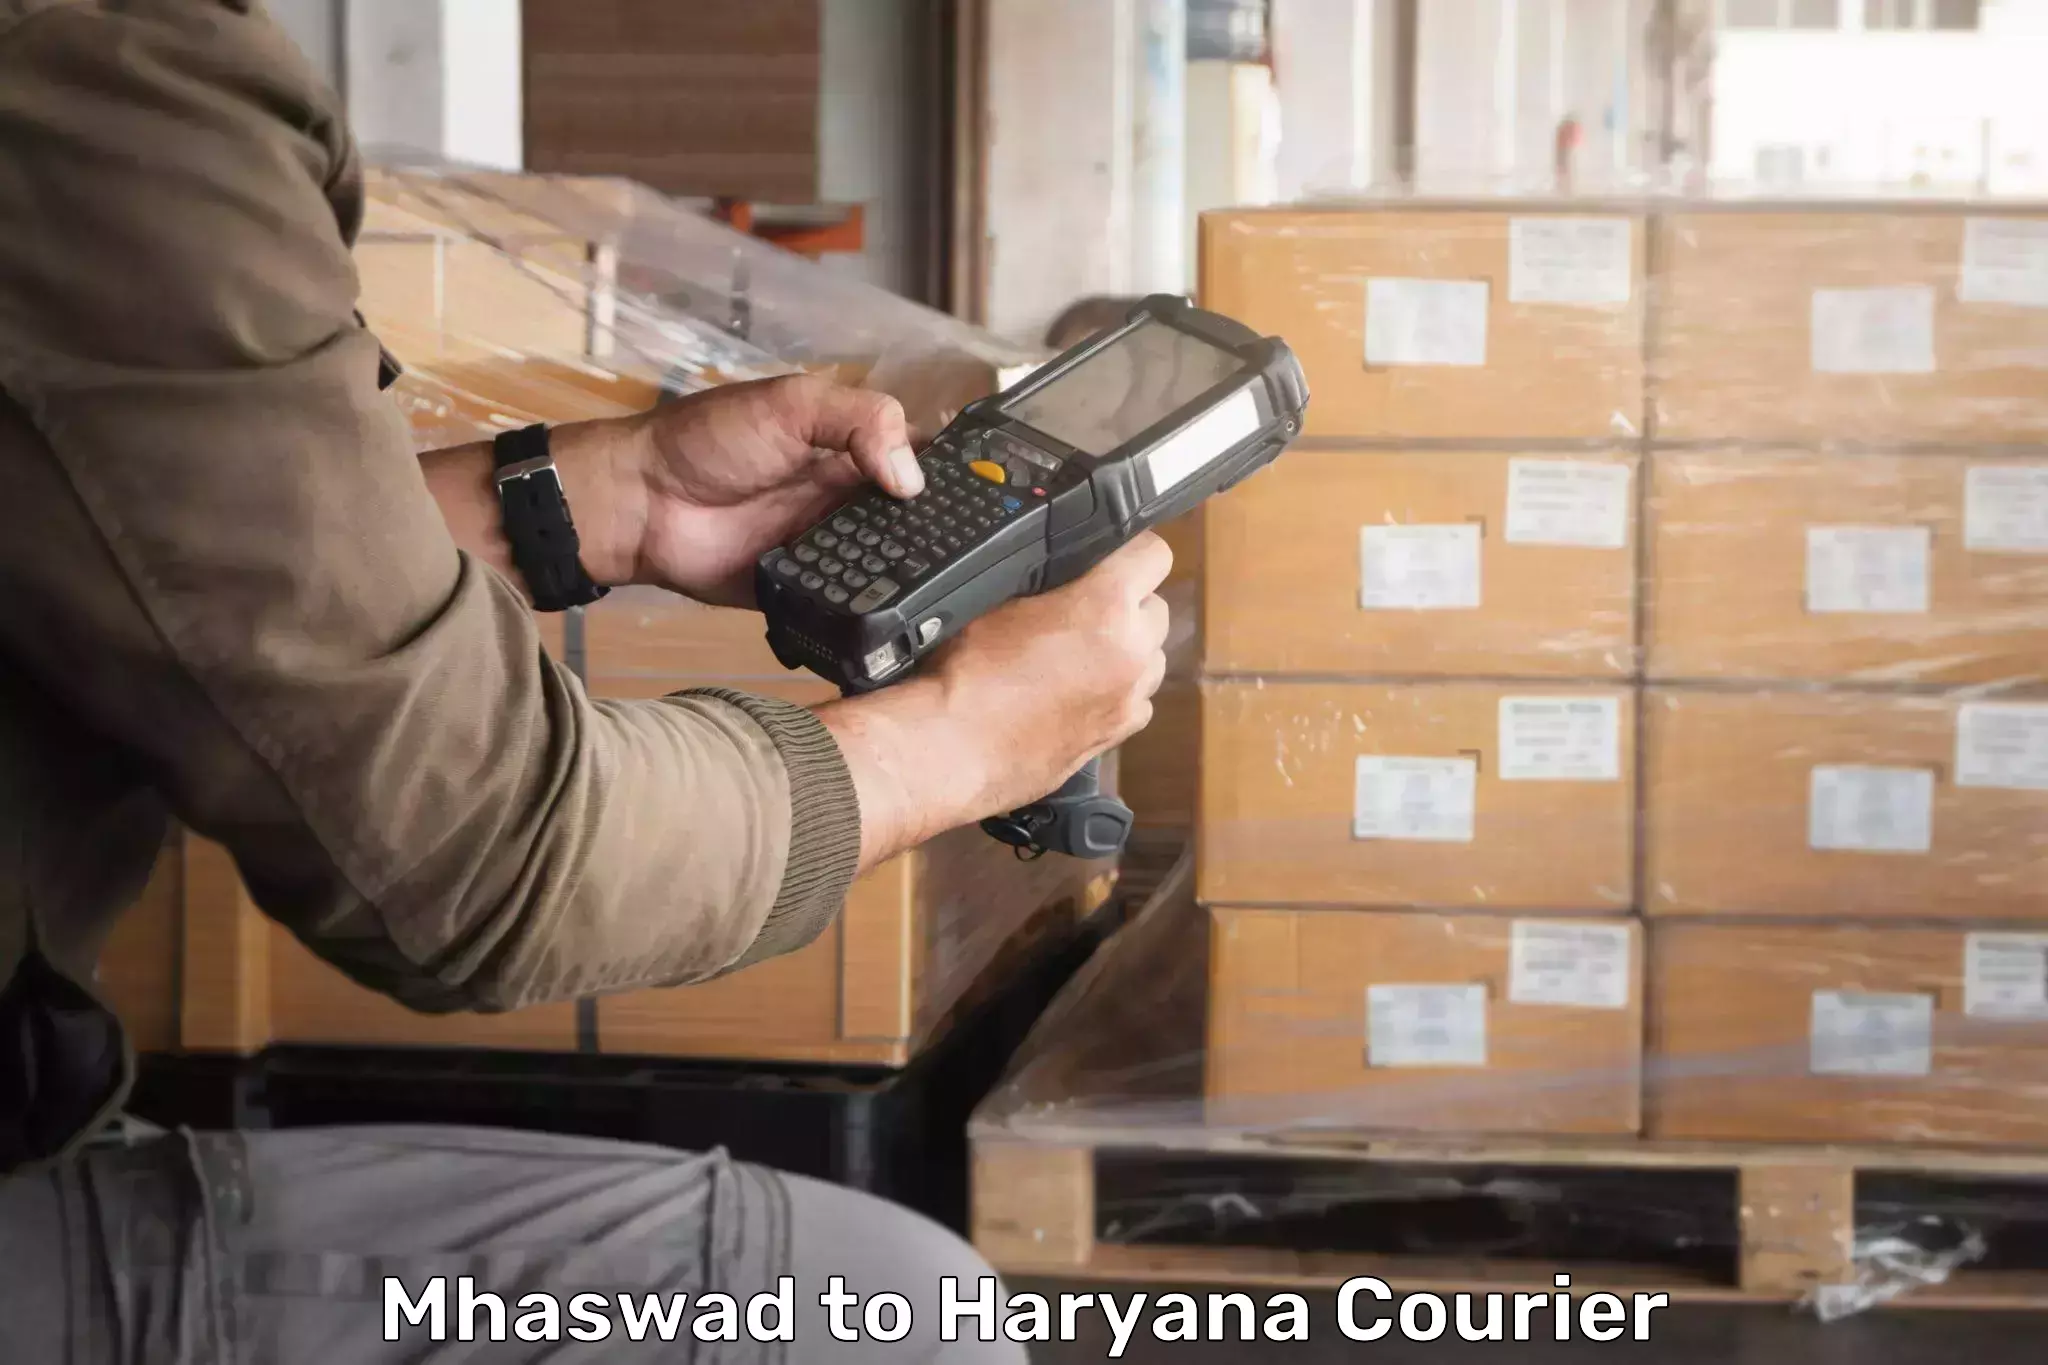 Advanced shipping network Mhaswad to Dharuhera